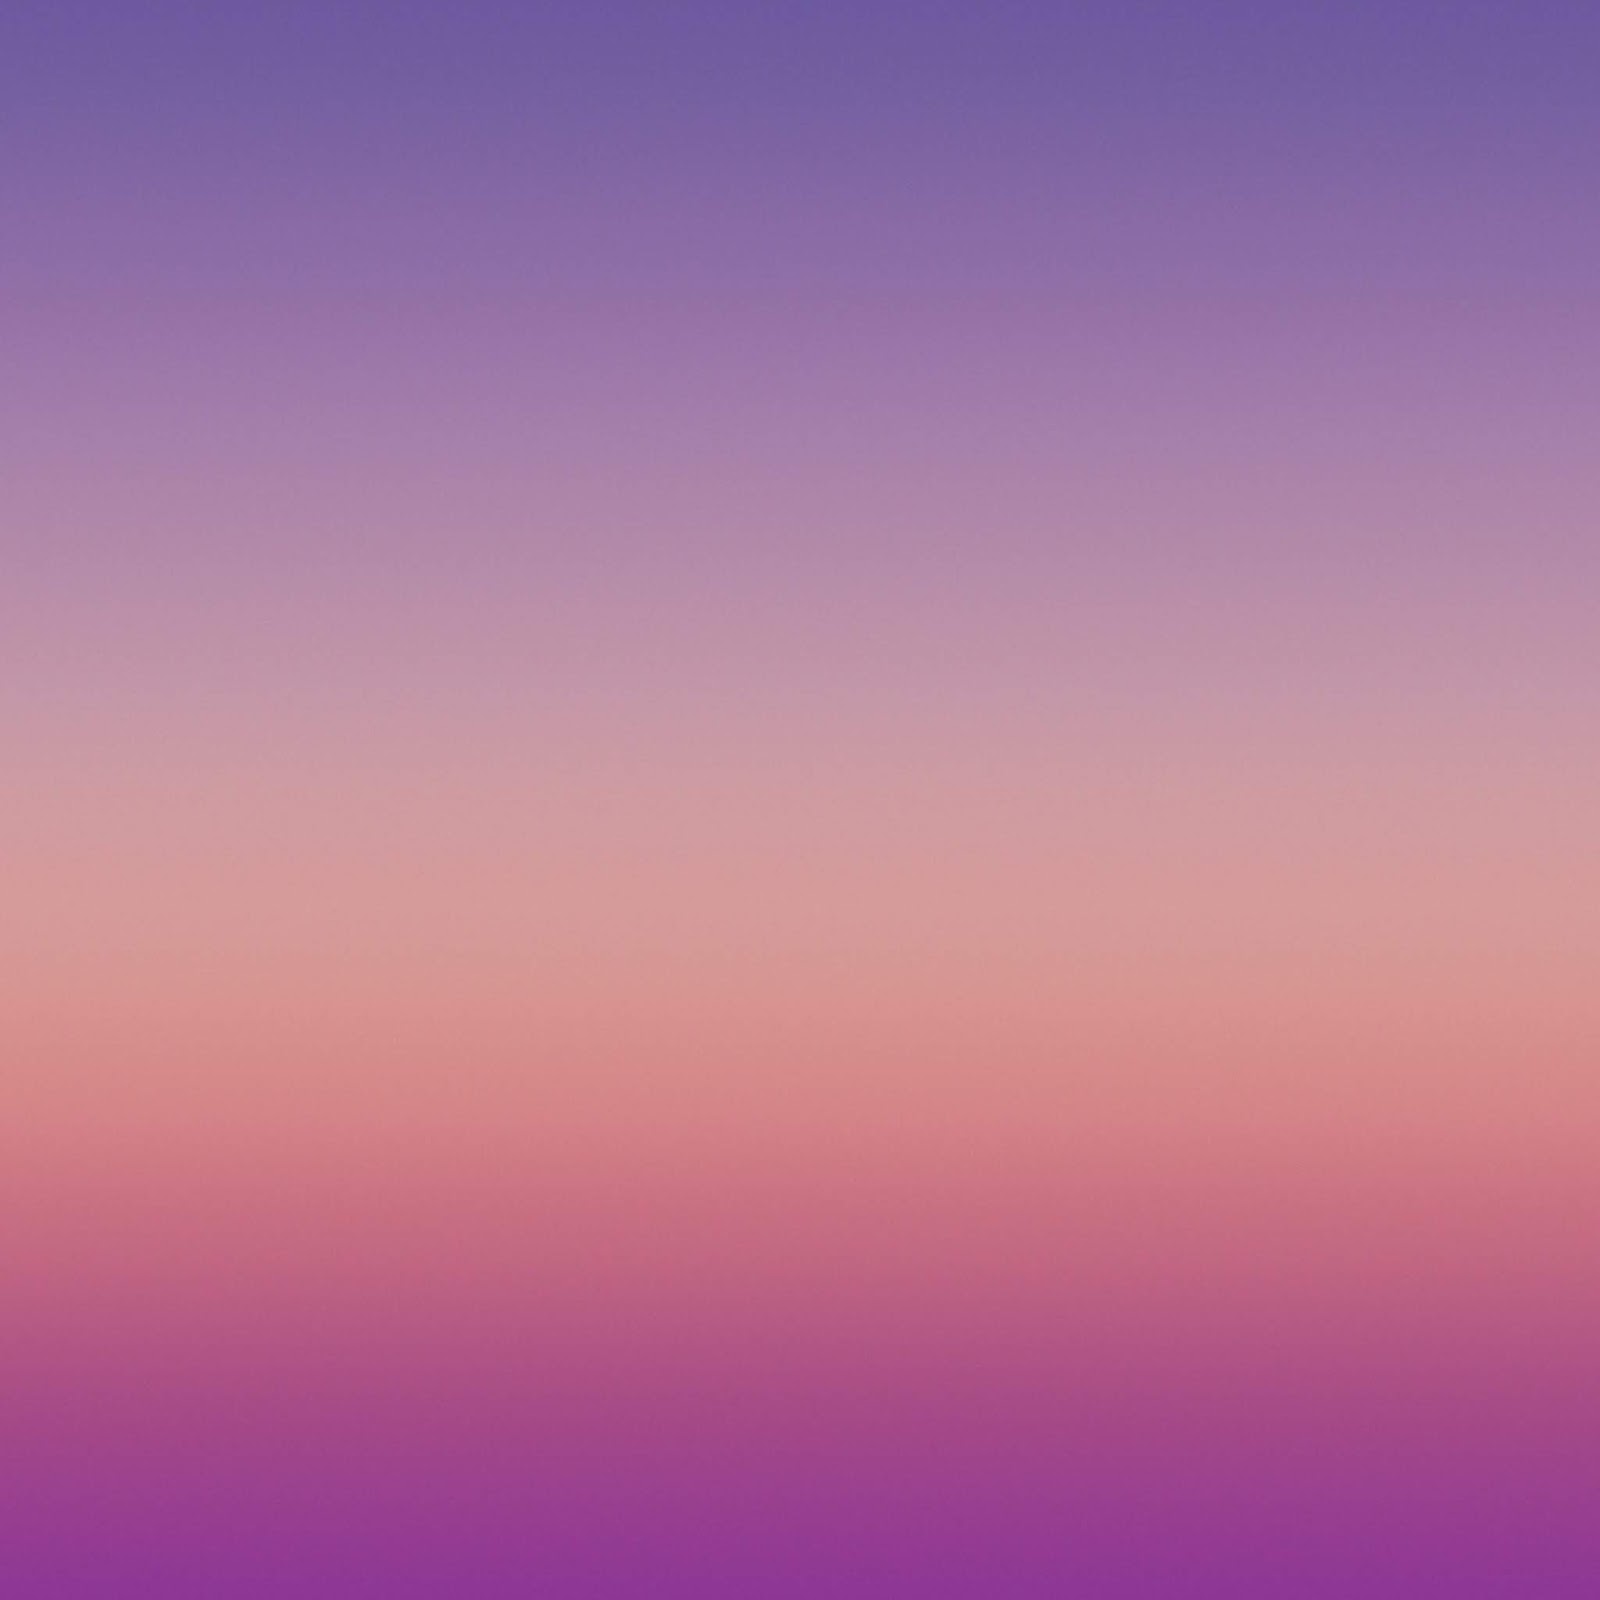 galaxy note 3 wallpaper hd 1080p,sky,violet,blue,purple,pink